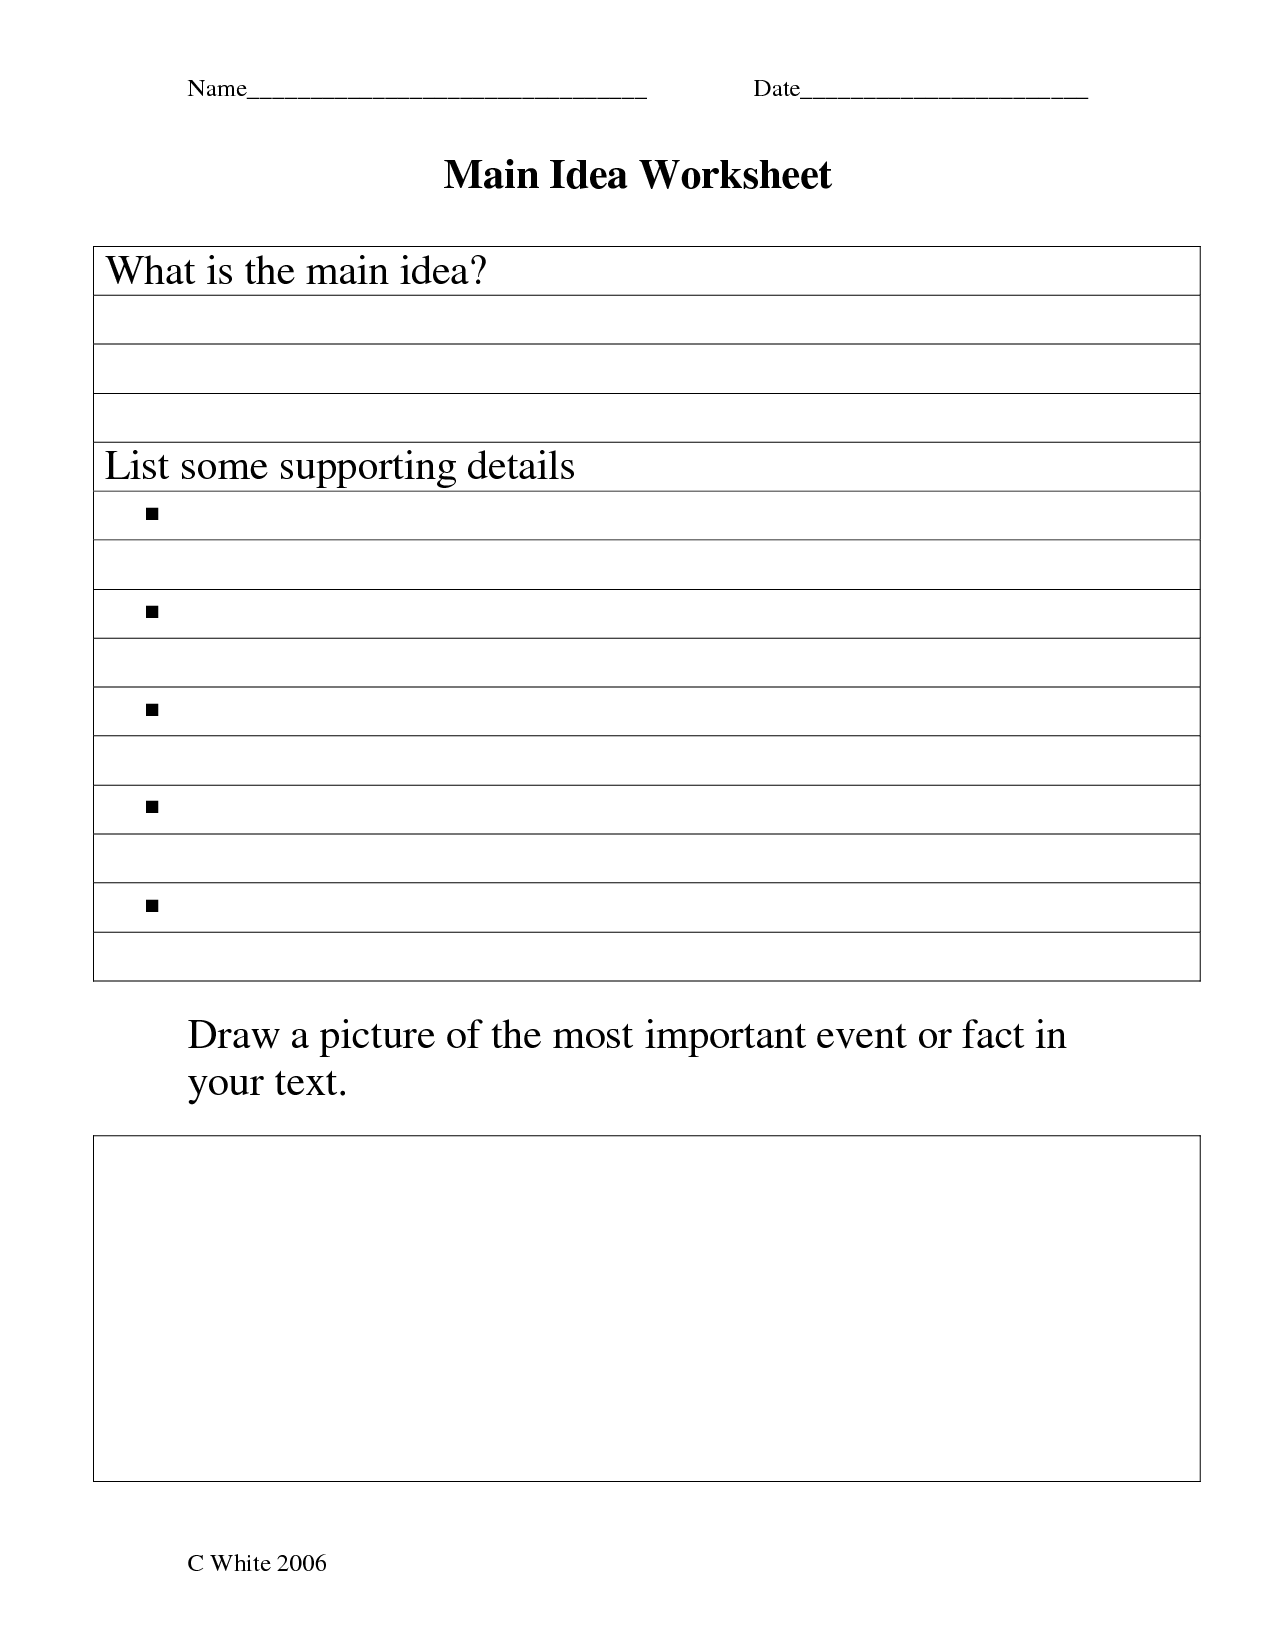 Main Idea Worksheet Image